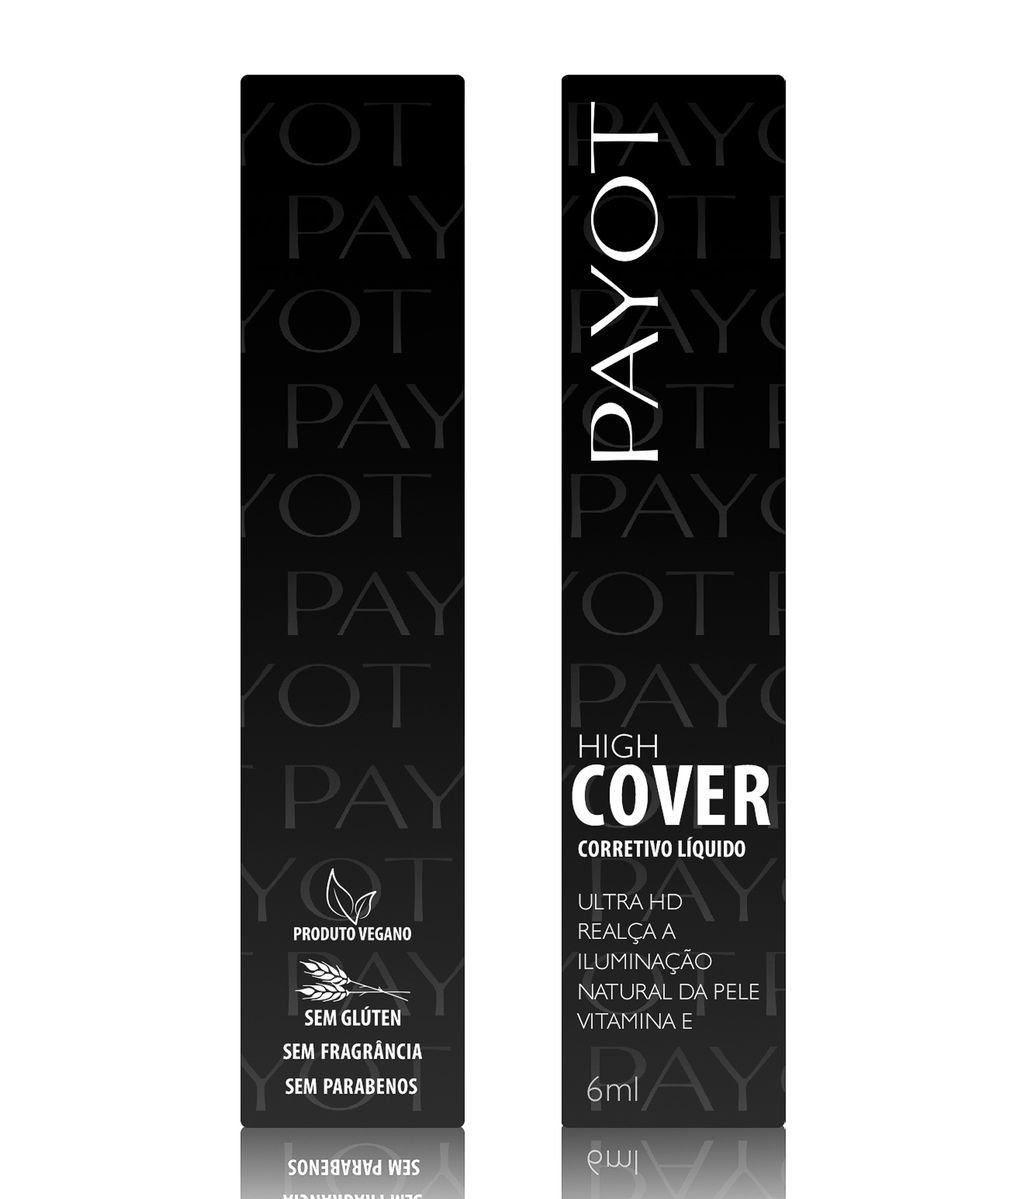 Corretivo líquido high cover Payot canela dark 1